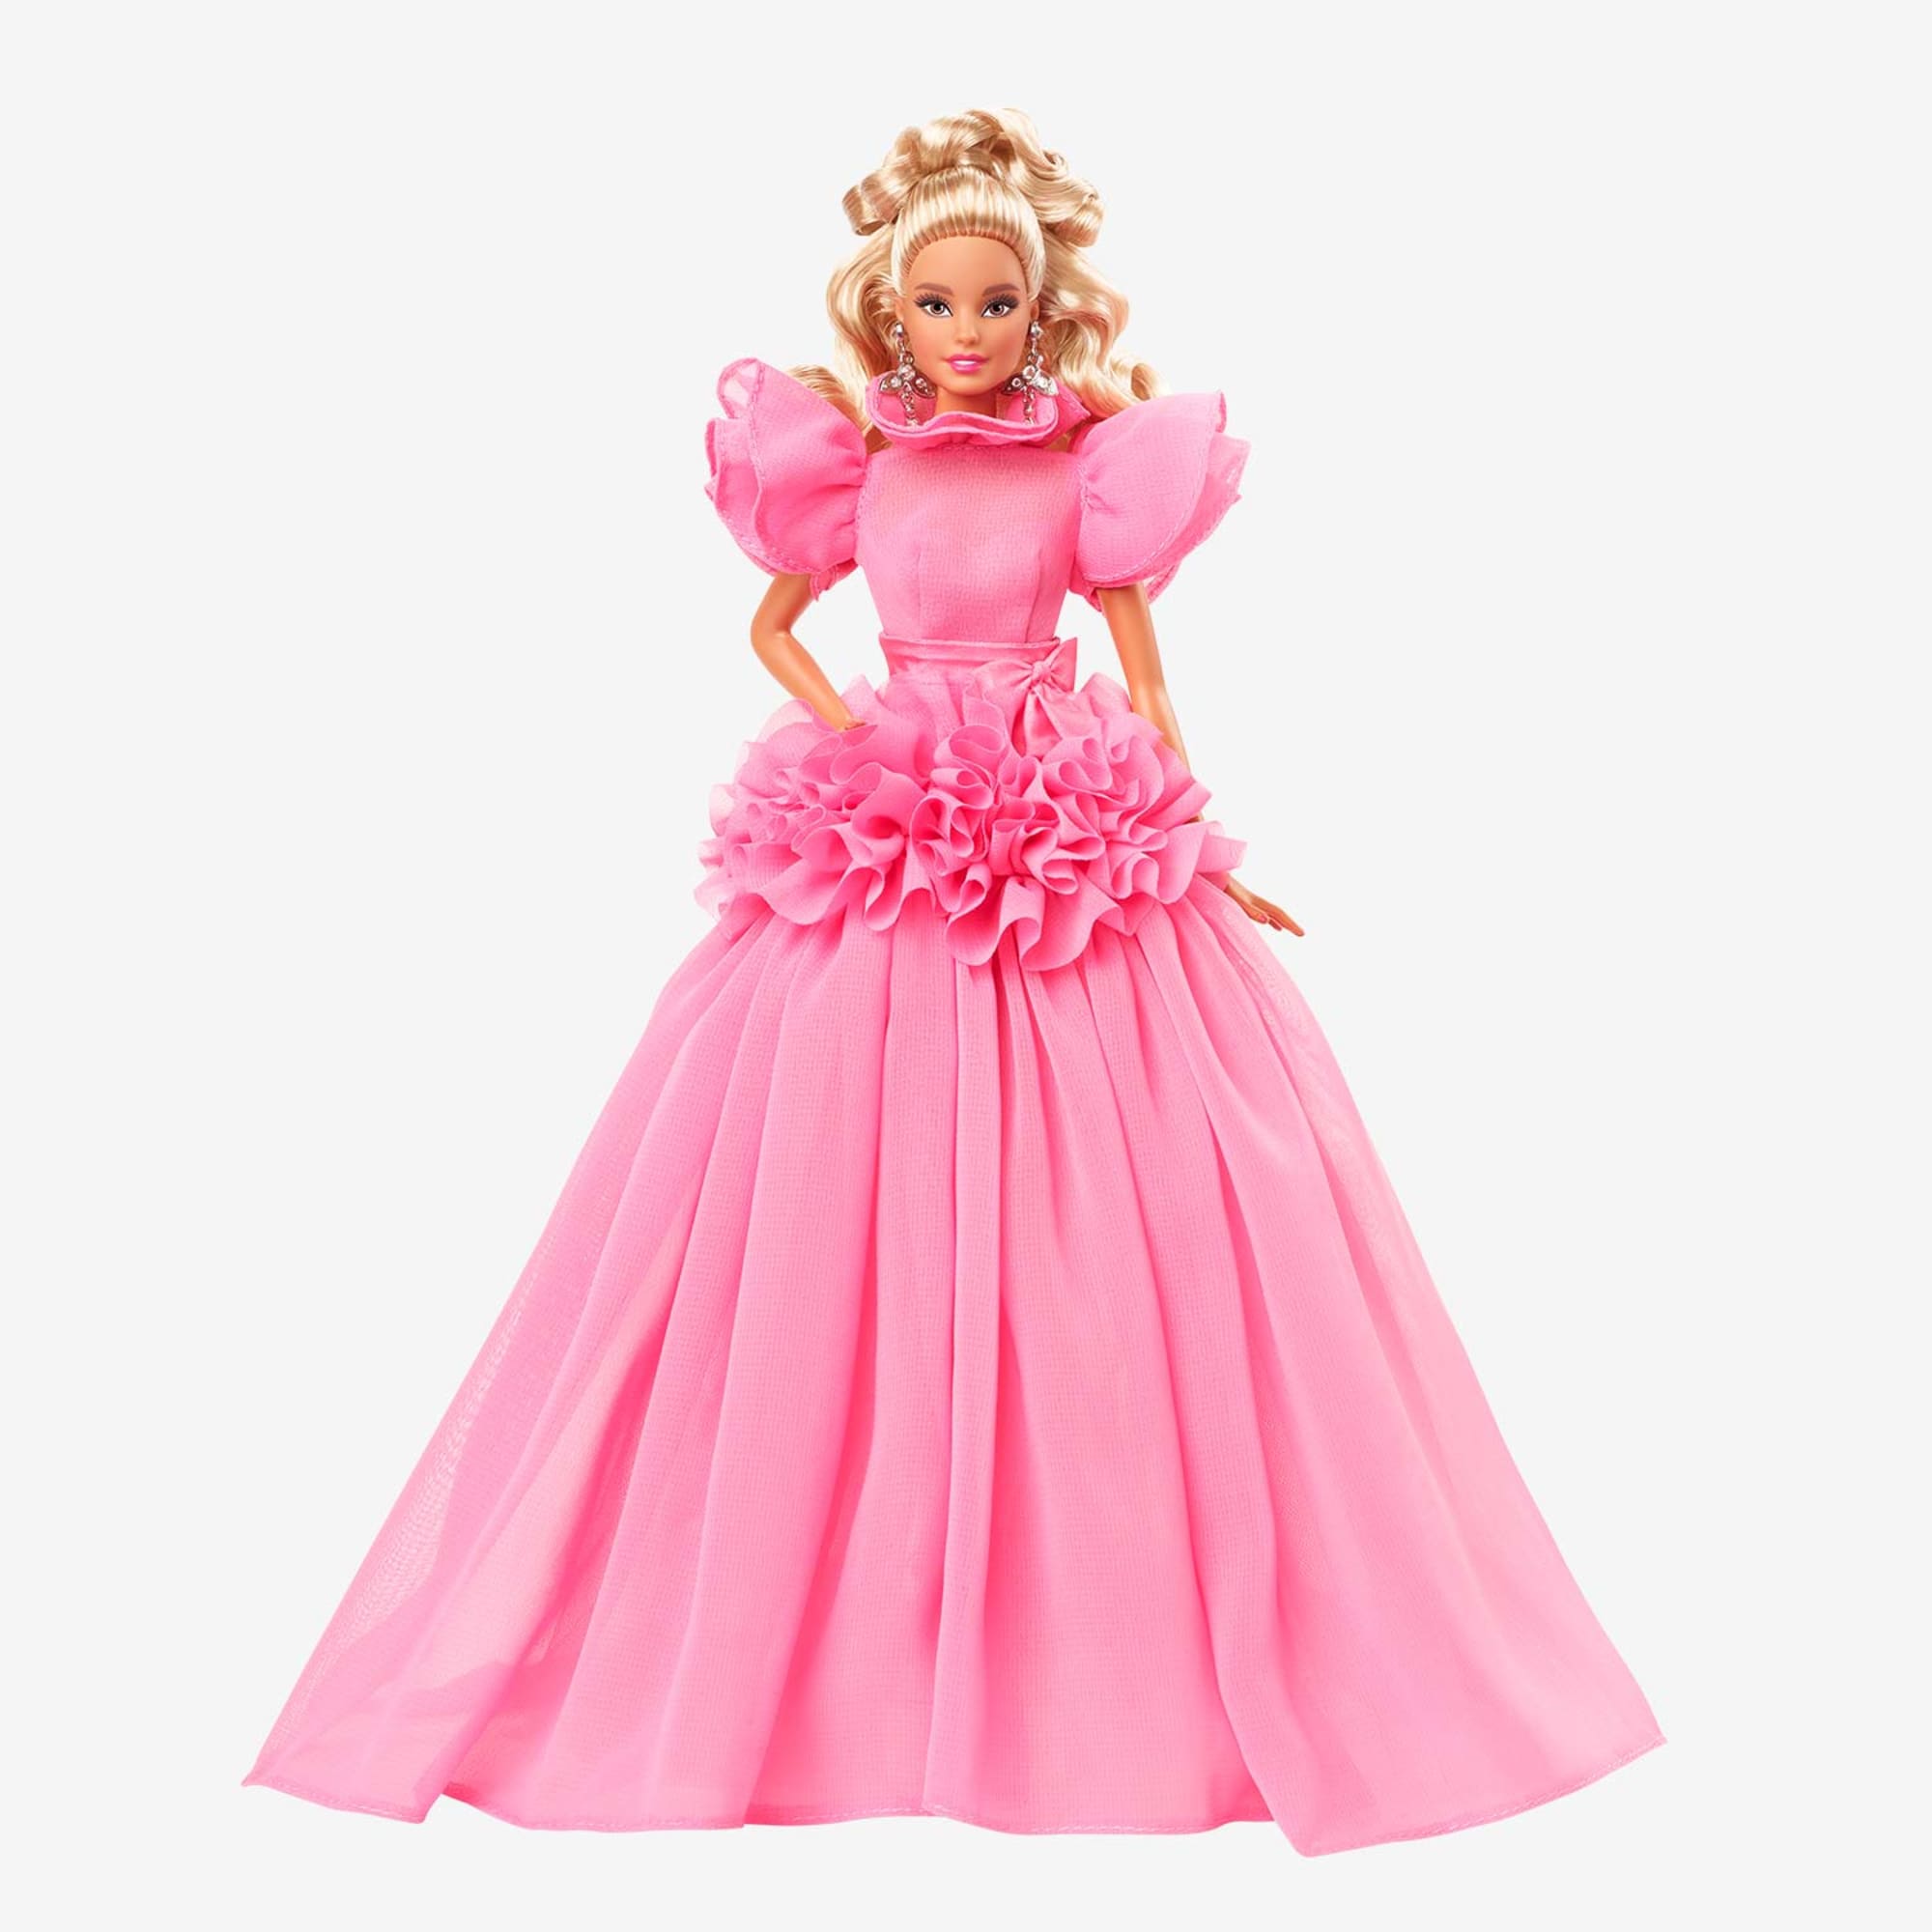 Barbie Pink Collection Doll vlr.eng.br